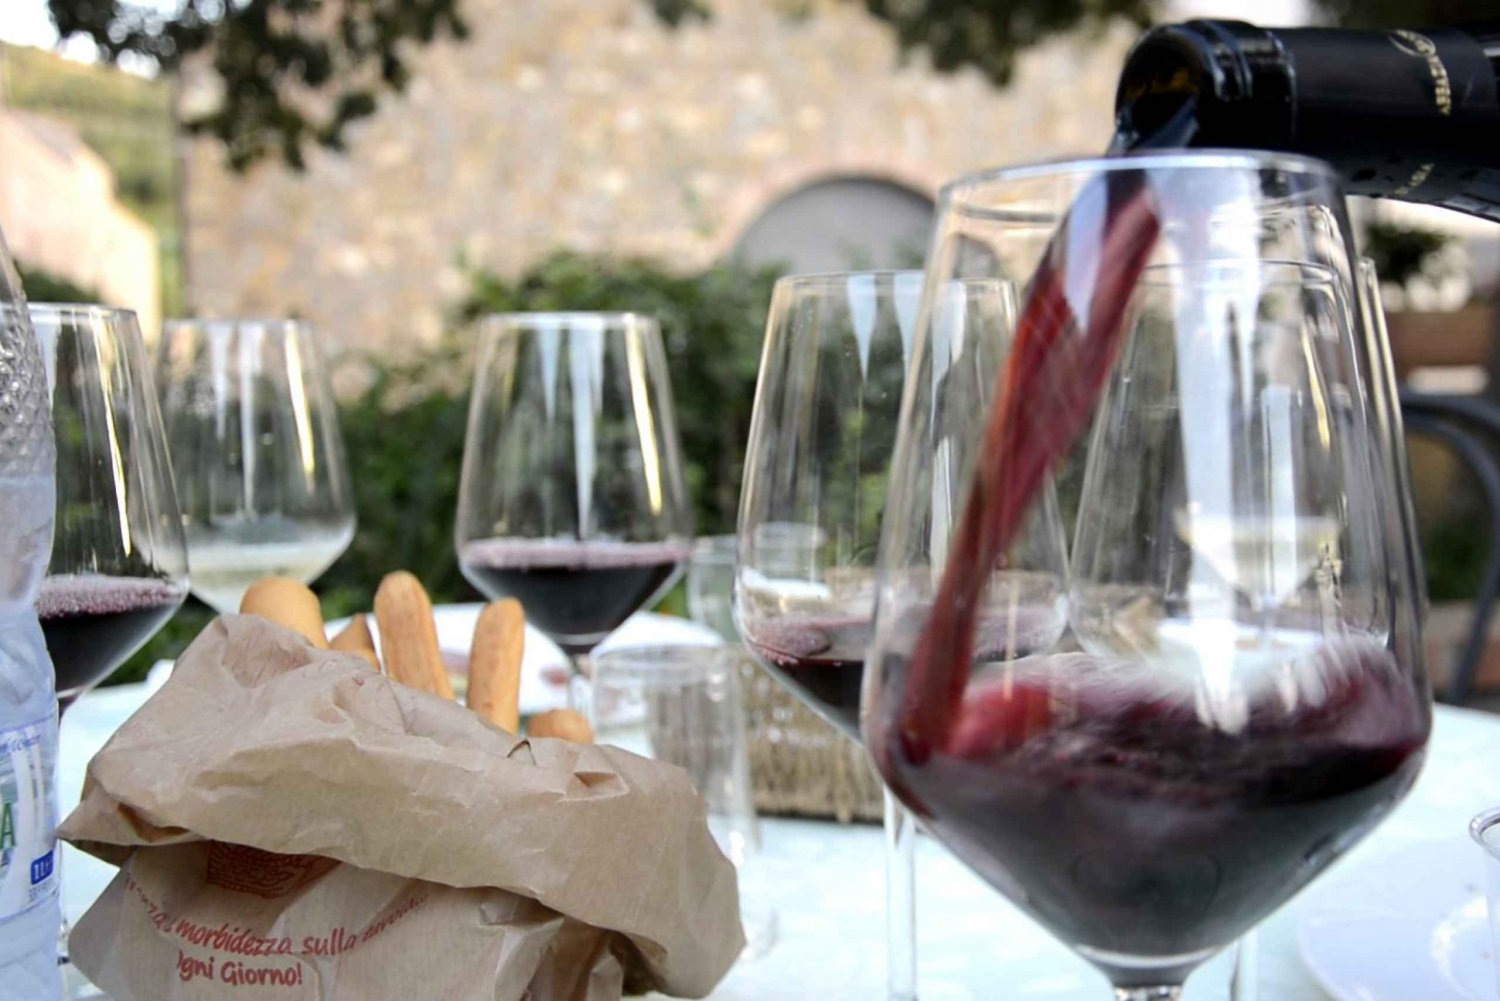 Cefalù: halfdaagse wijnproeverij-tour in Castelbuono